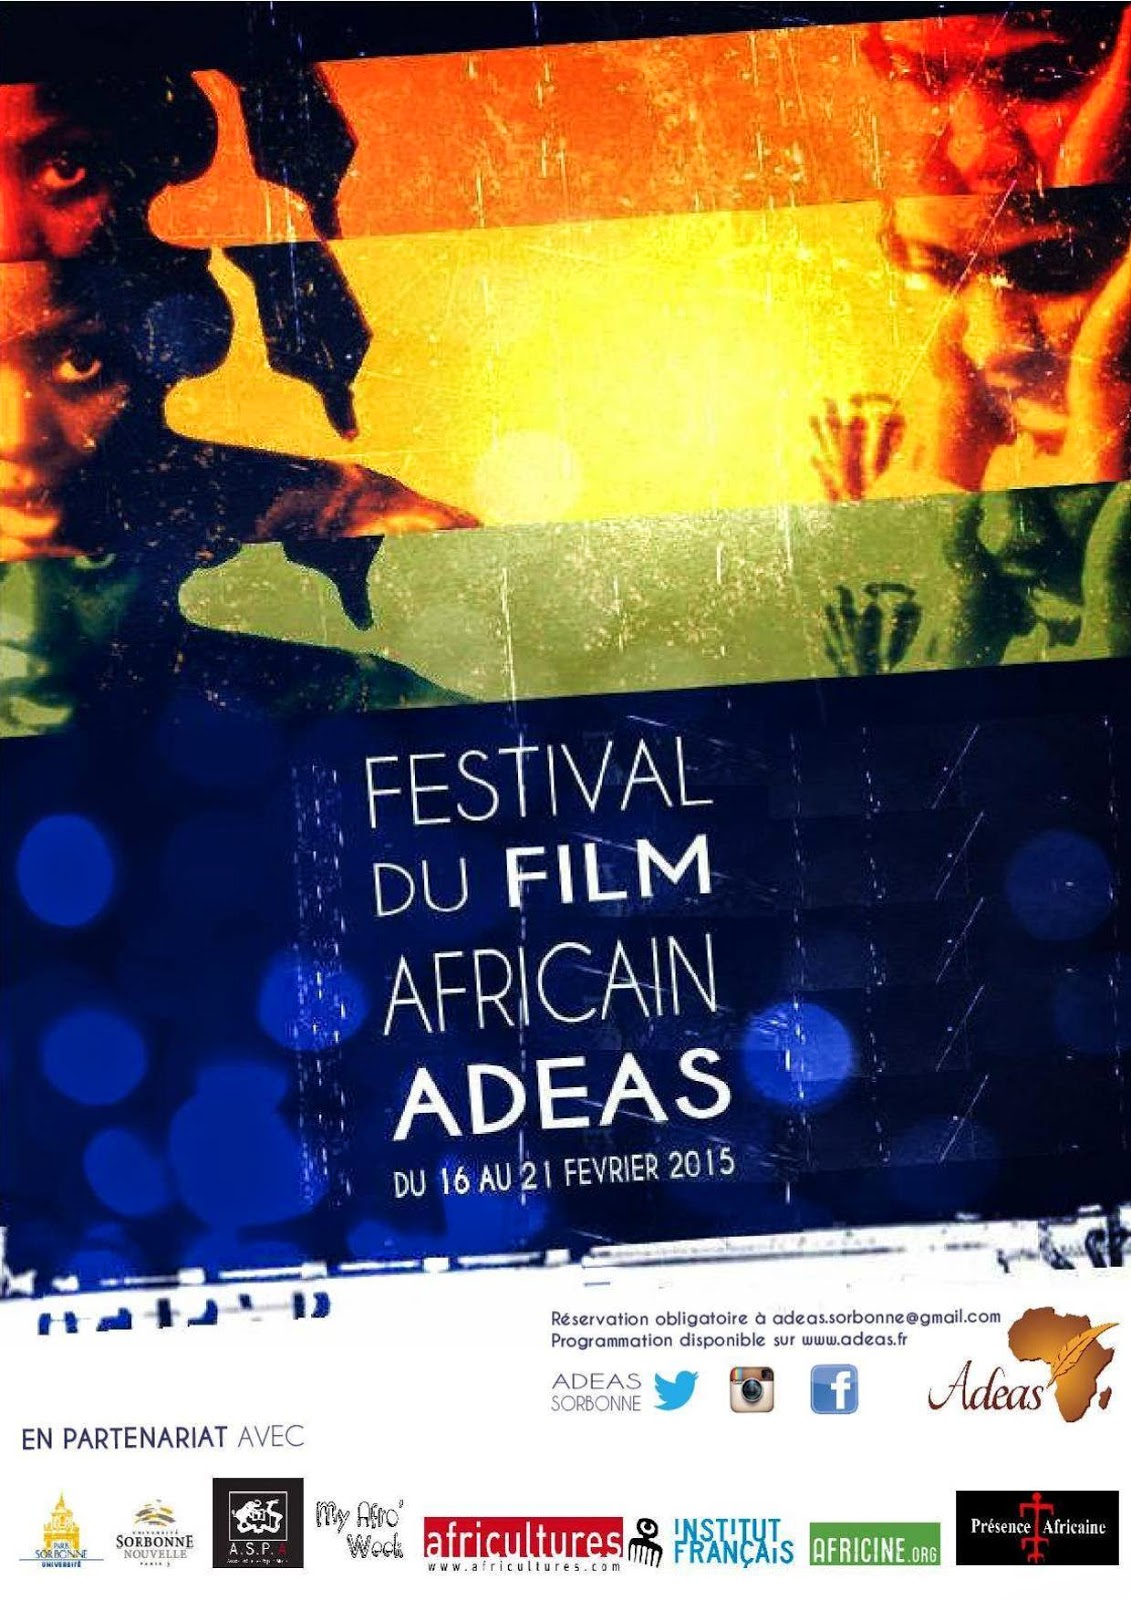 Festival du Film Africain - ADEAS